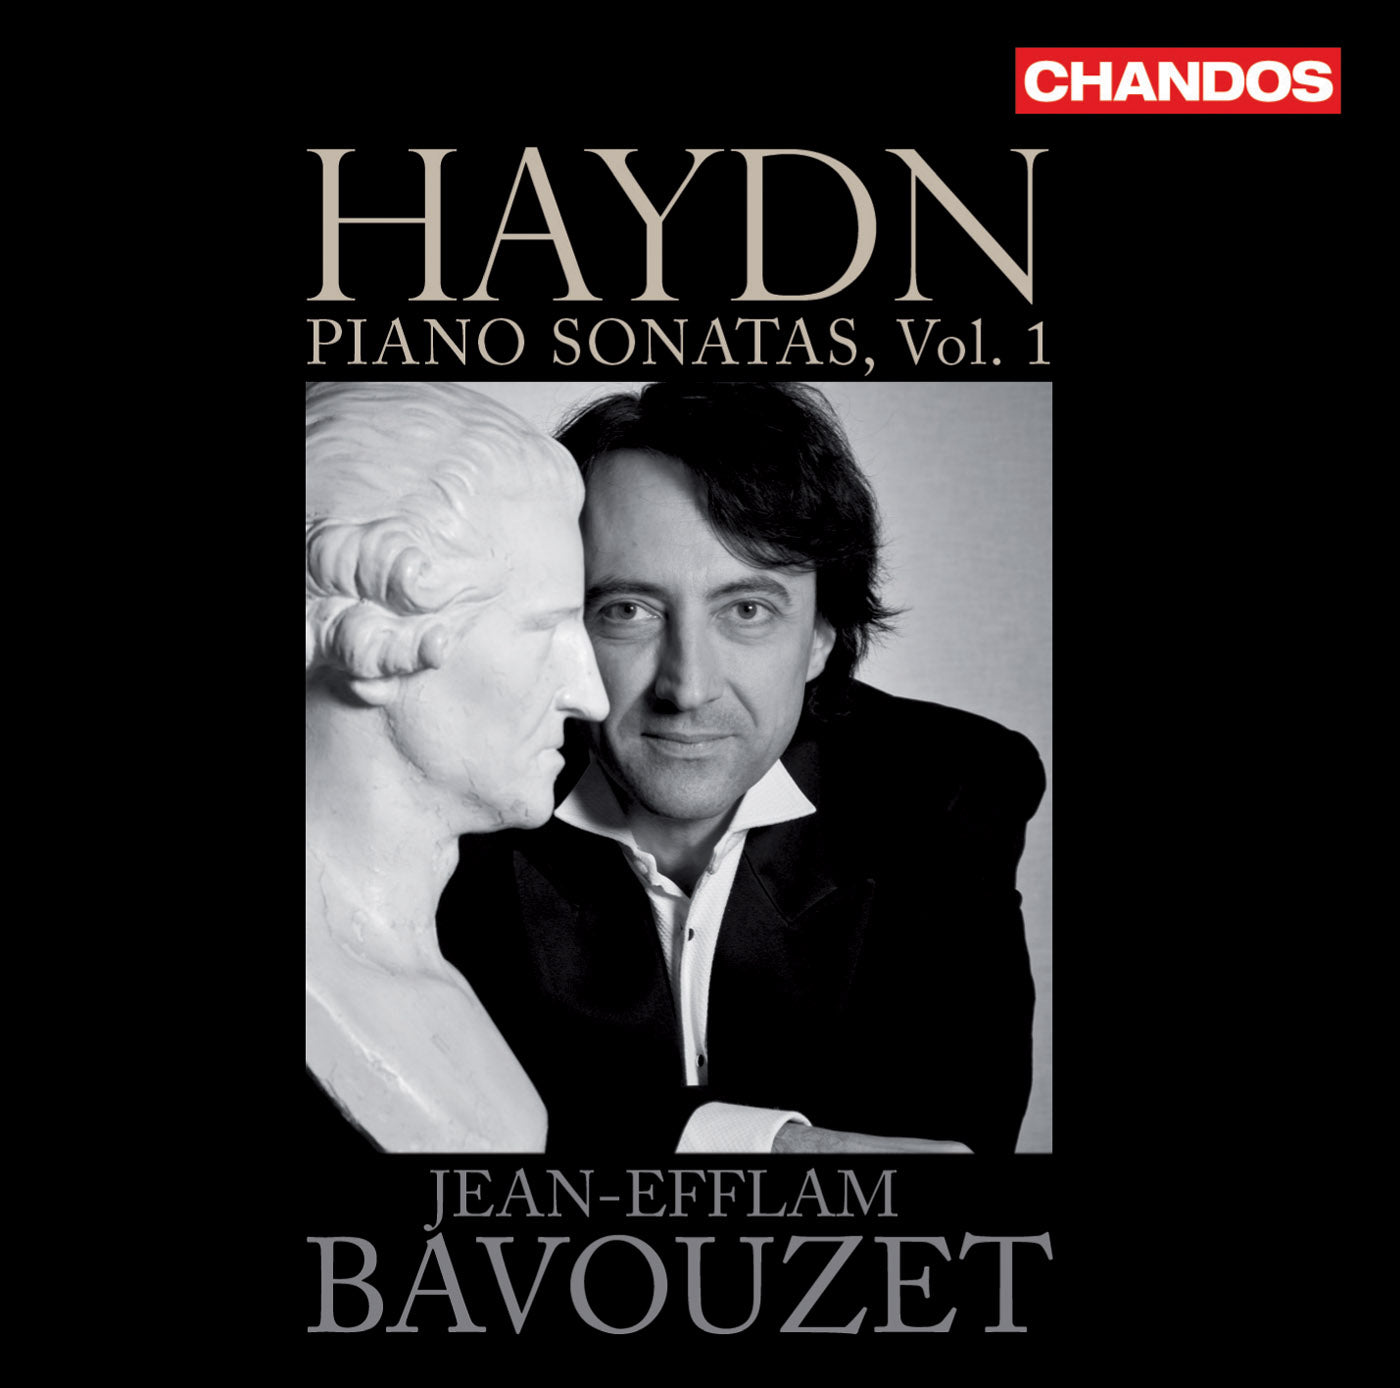 Haydn: The Complete Piano Sonatas, Vol. 1 / Bavouzet